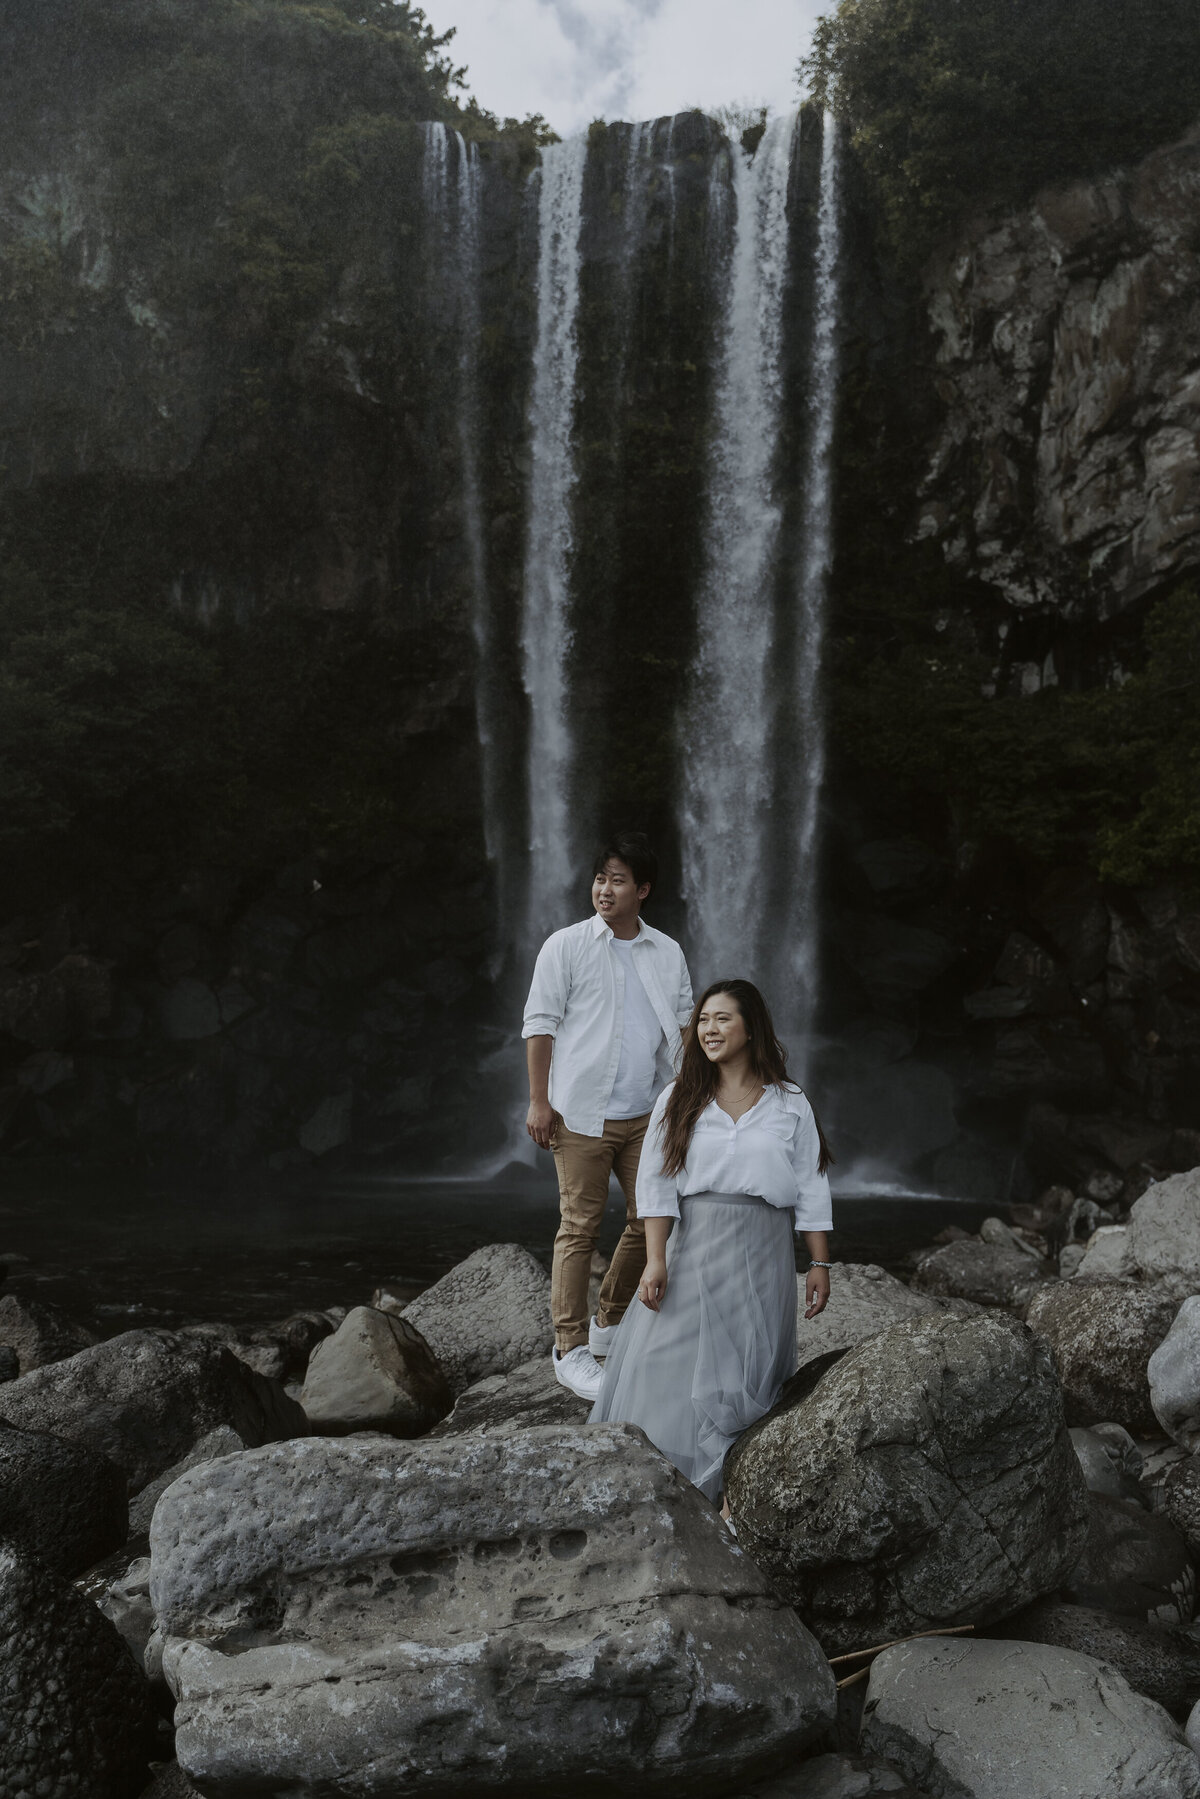 the couple strike a pose at jeongbang waterfall in jeju island